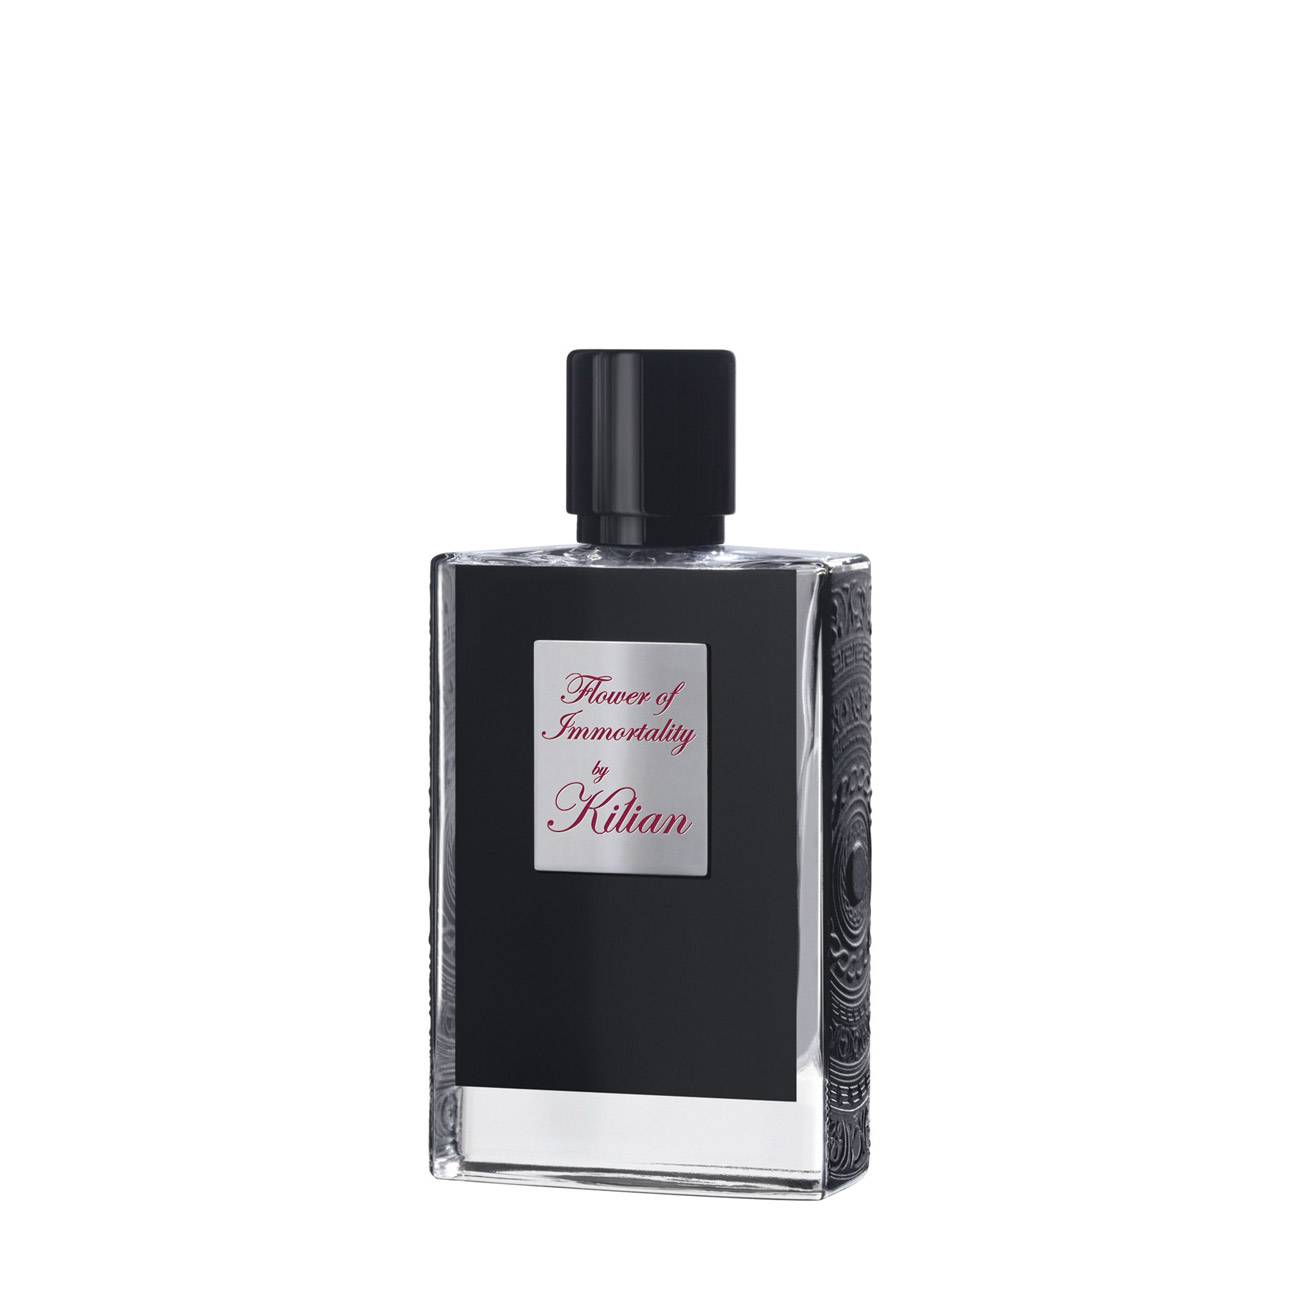 Parfum de niche Kilian FLOWER OF IMMORTALITY REFILLABLE 50ml cu comanda online